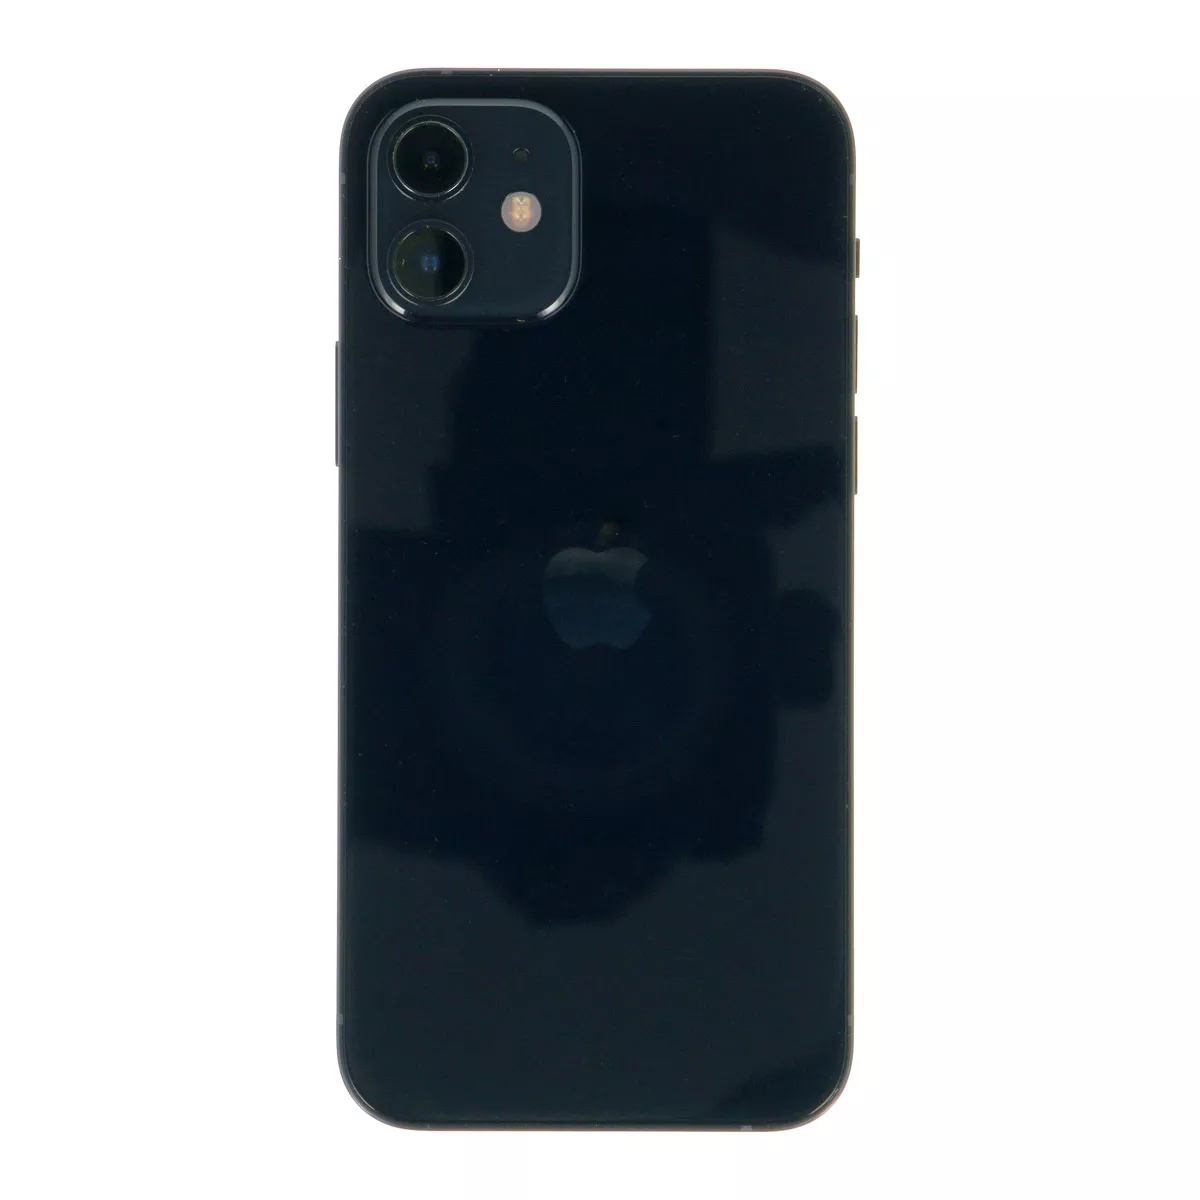 Apple iPhone 12 128 GB Black A+